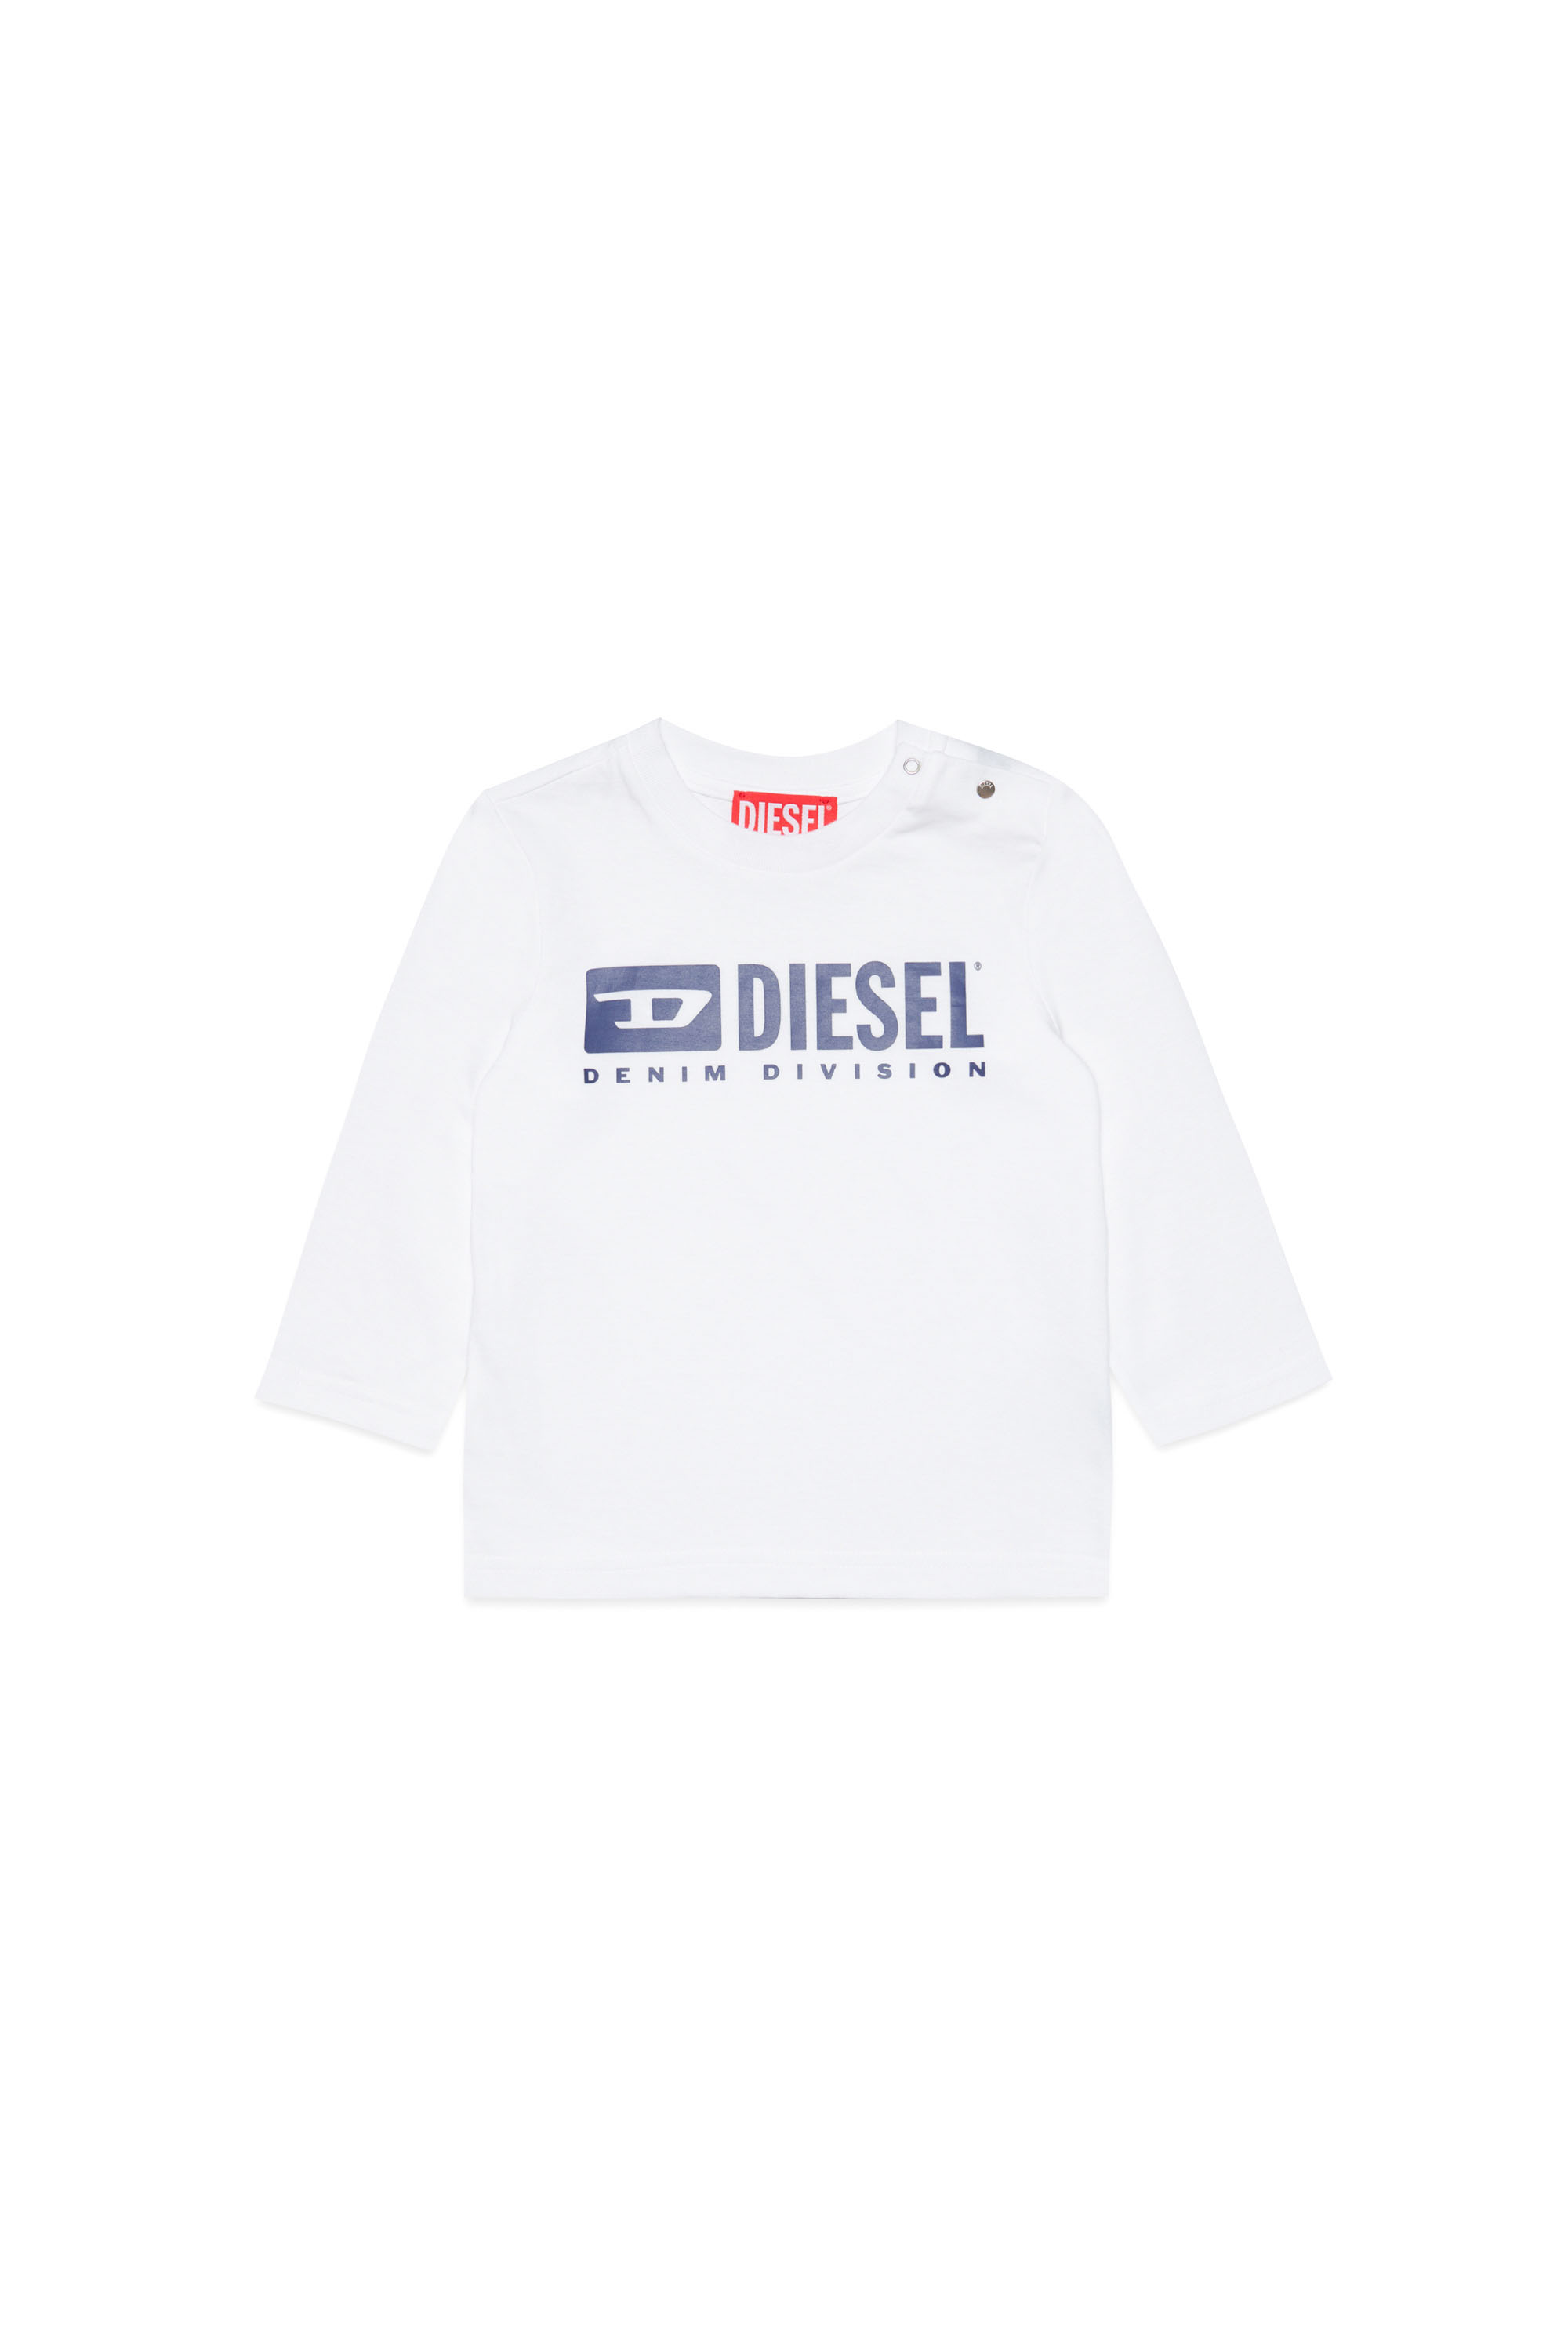 Diesel - TCESB, White - Image 1